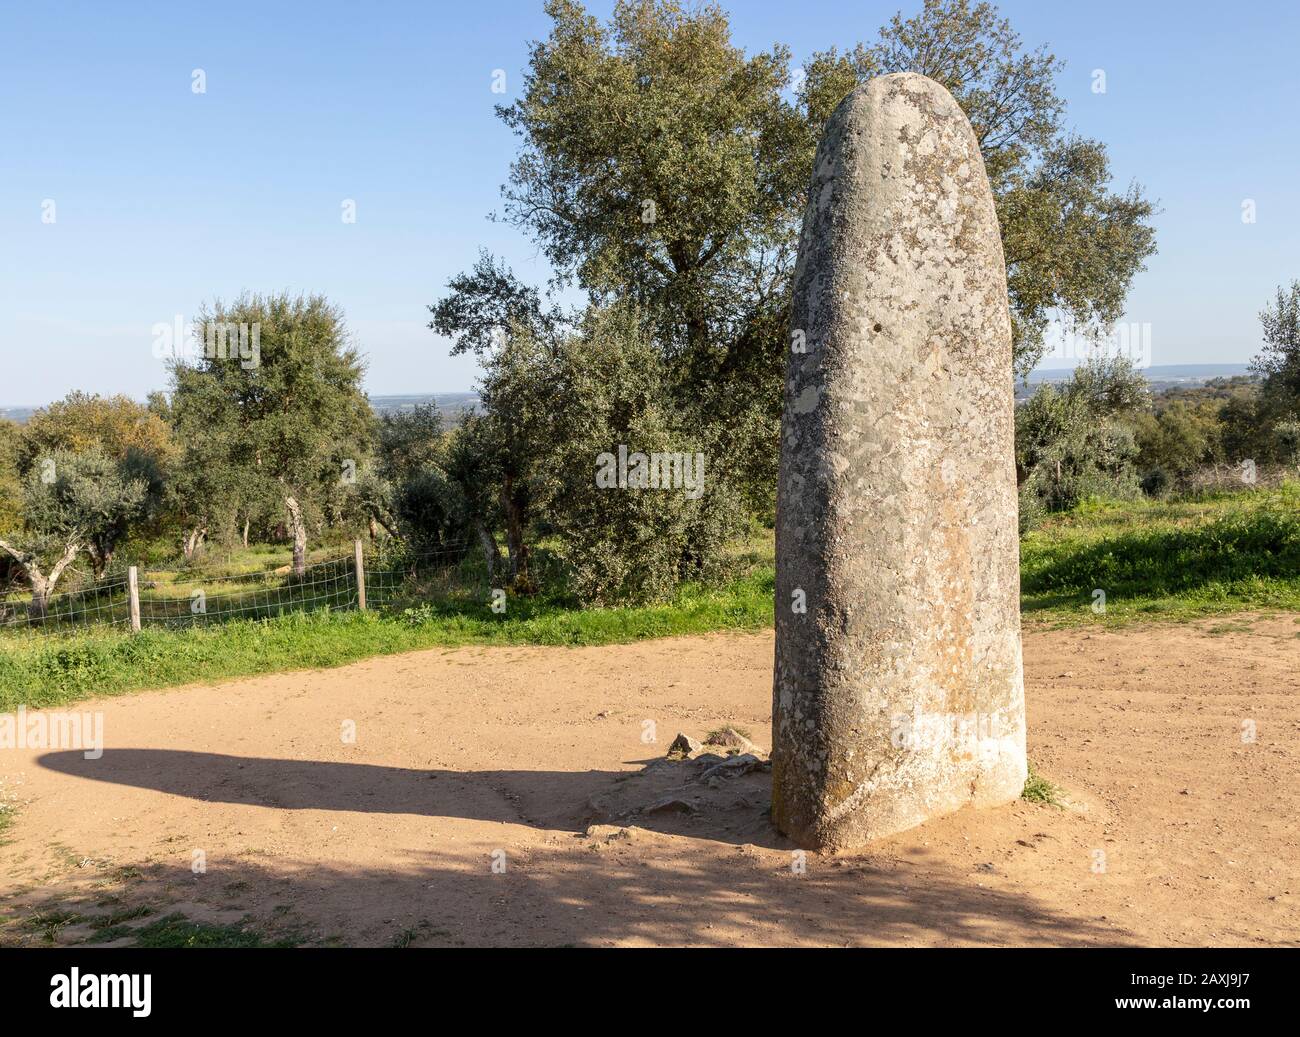 Neolithic standing stone 4 metres high called the Menir dos Almendres, near Evora, Alentejo, Portugal, Southern Europe Stock Photo